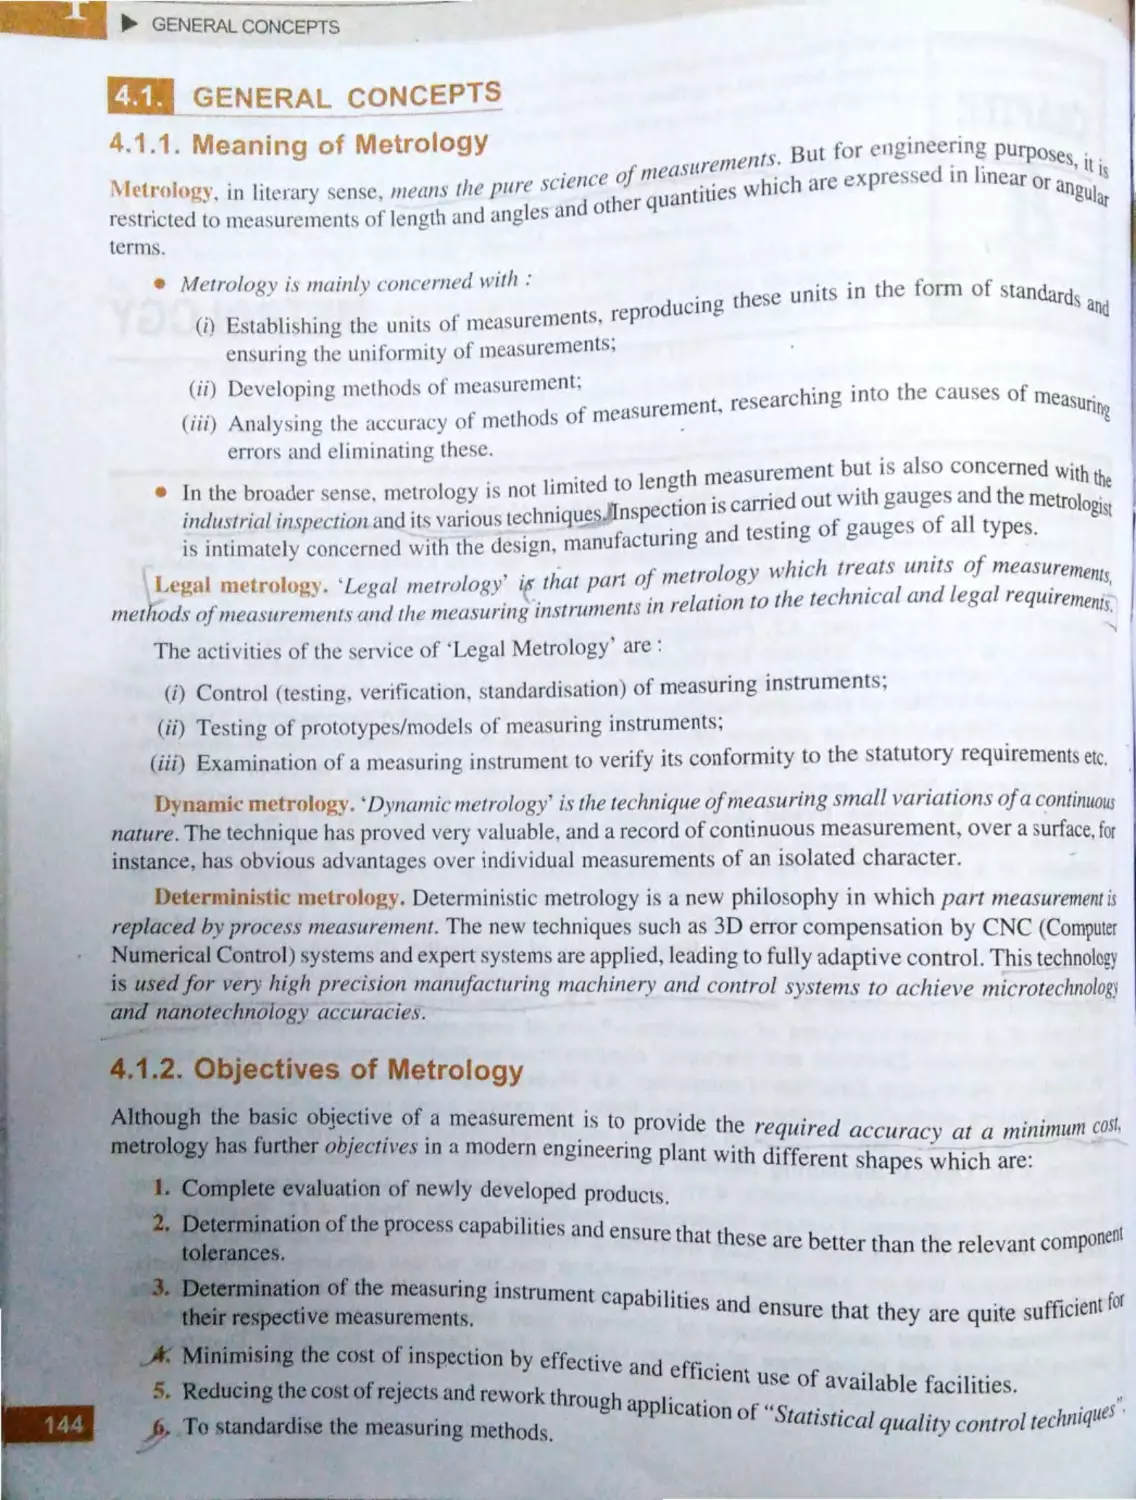 4.1.2. Objectives of Metrology